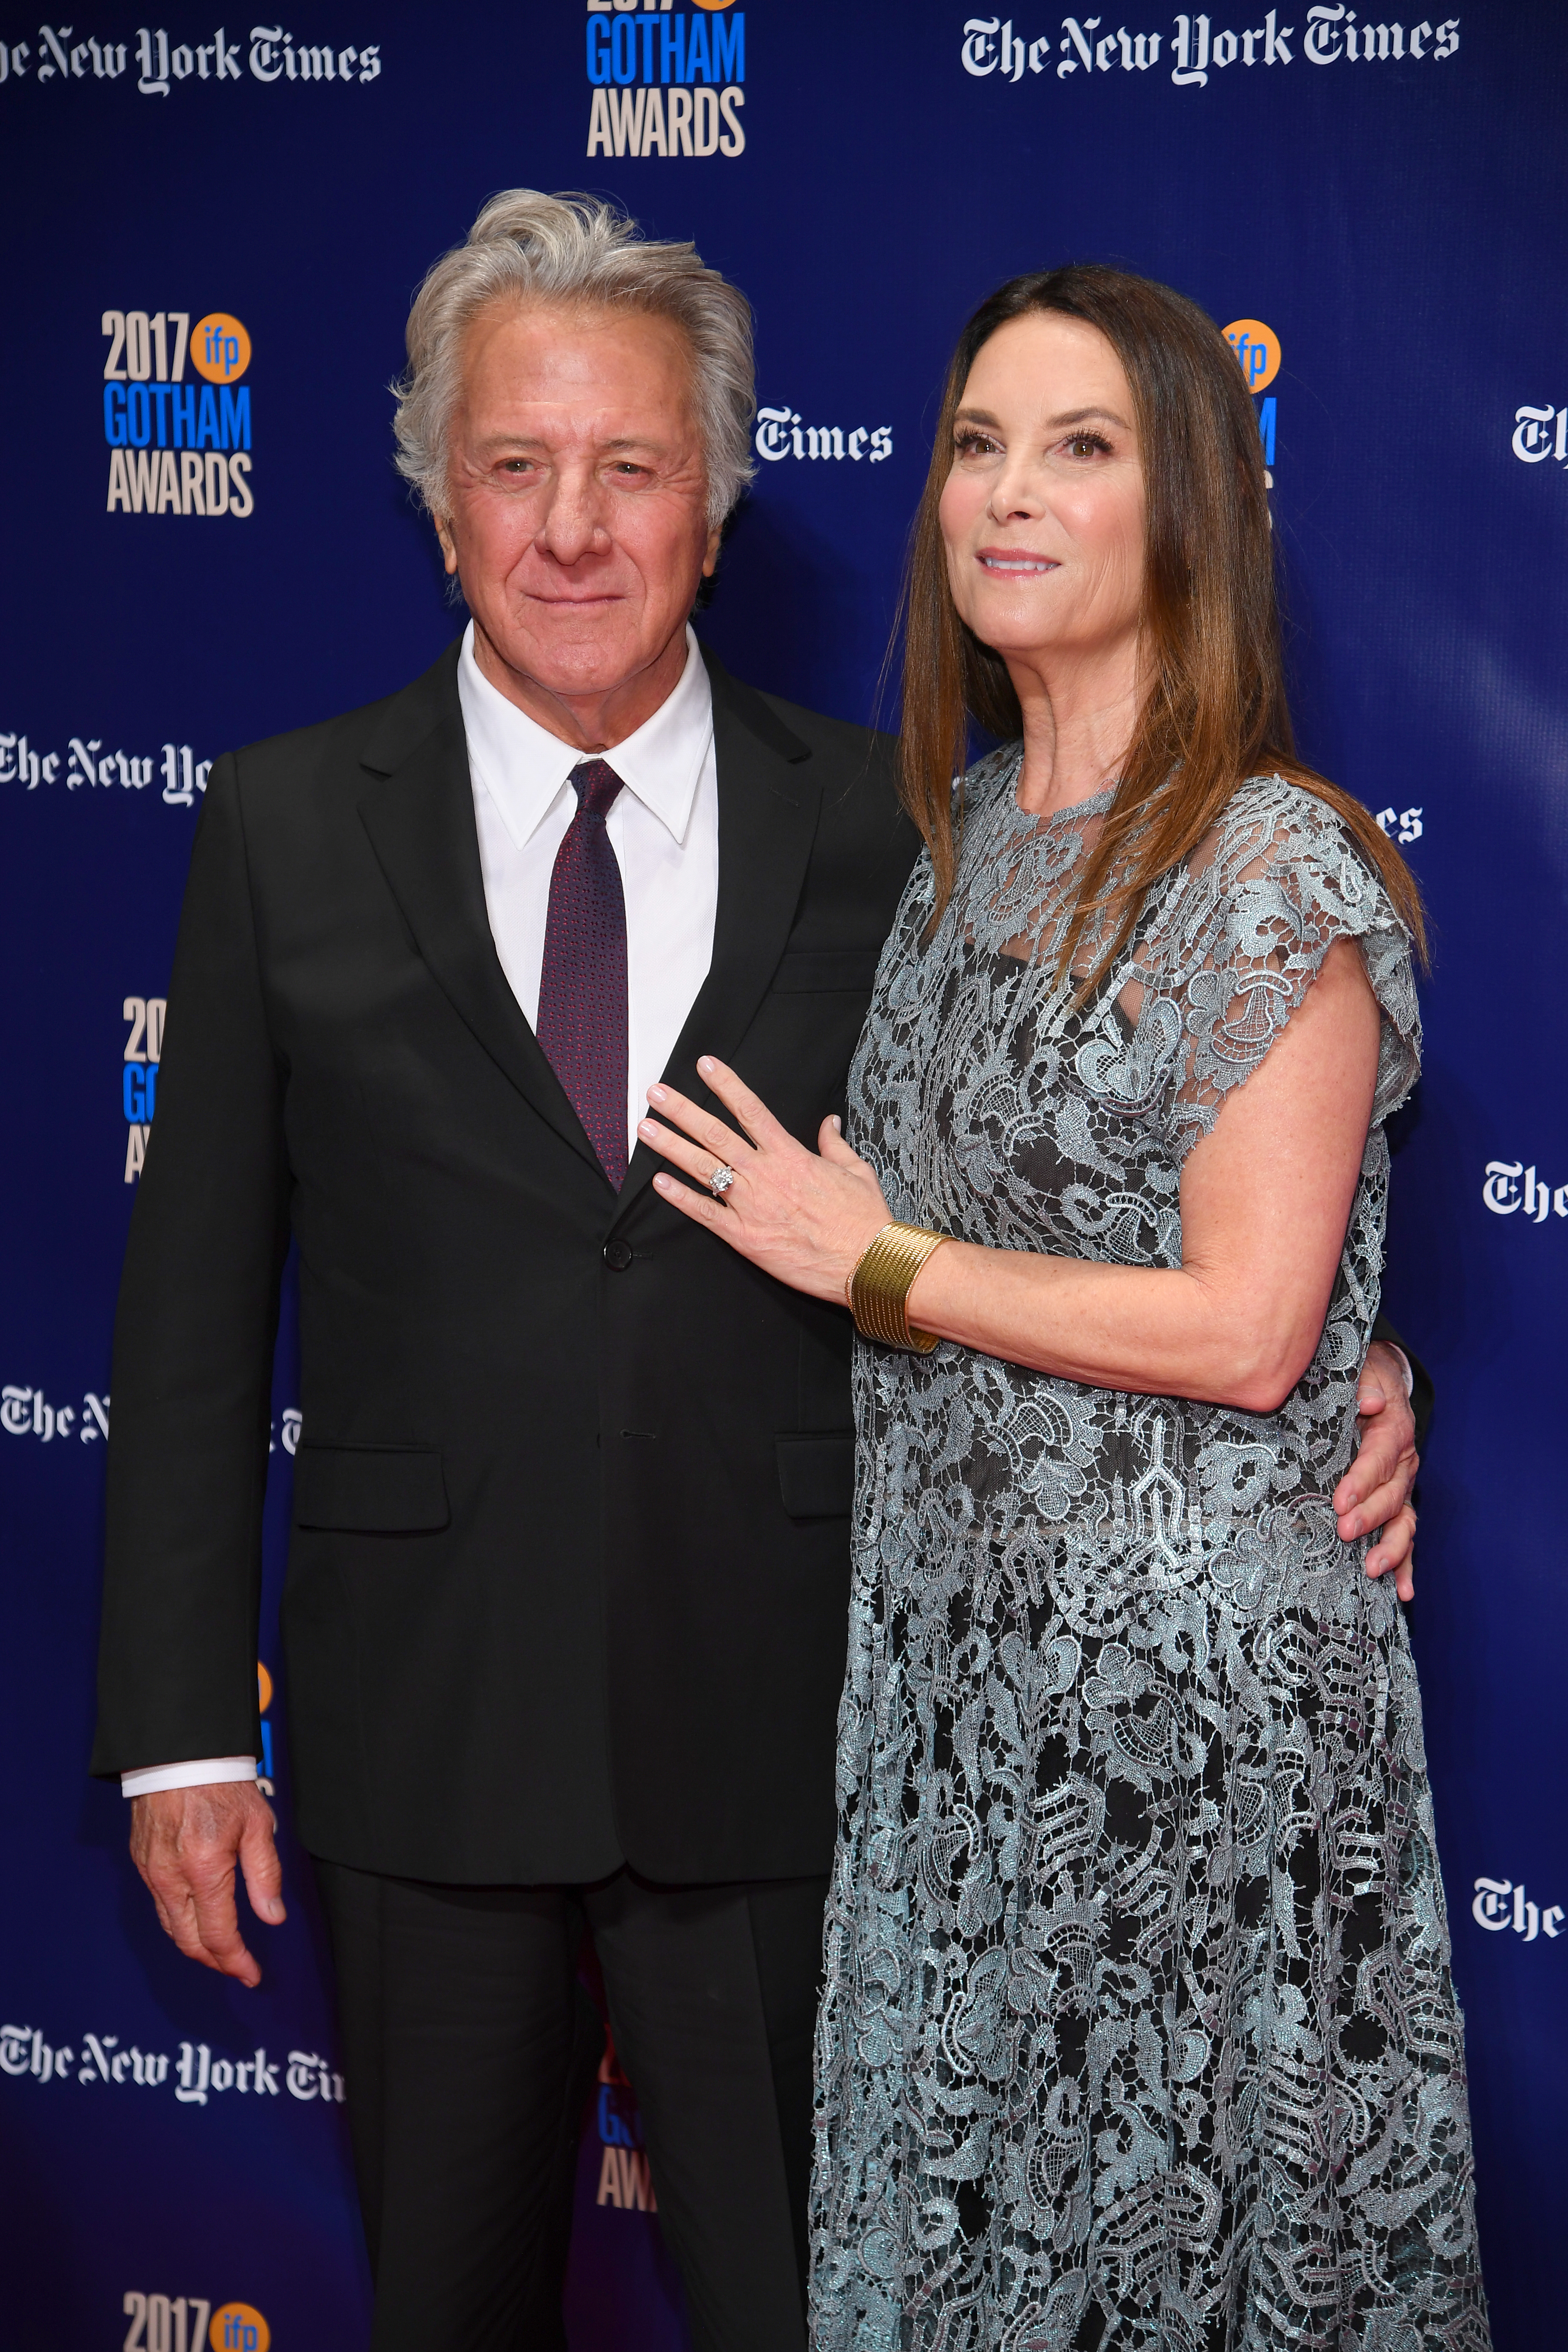 Dustin Hoffman und Lisa Hoffman bei den 27th Annual Gotham Independent Film Awards des IFP in New York City am 27. November 2017. | Quelle: Getty Images